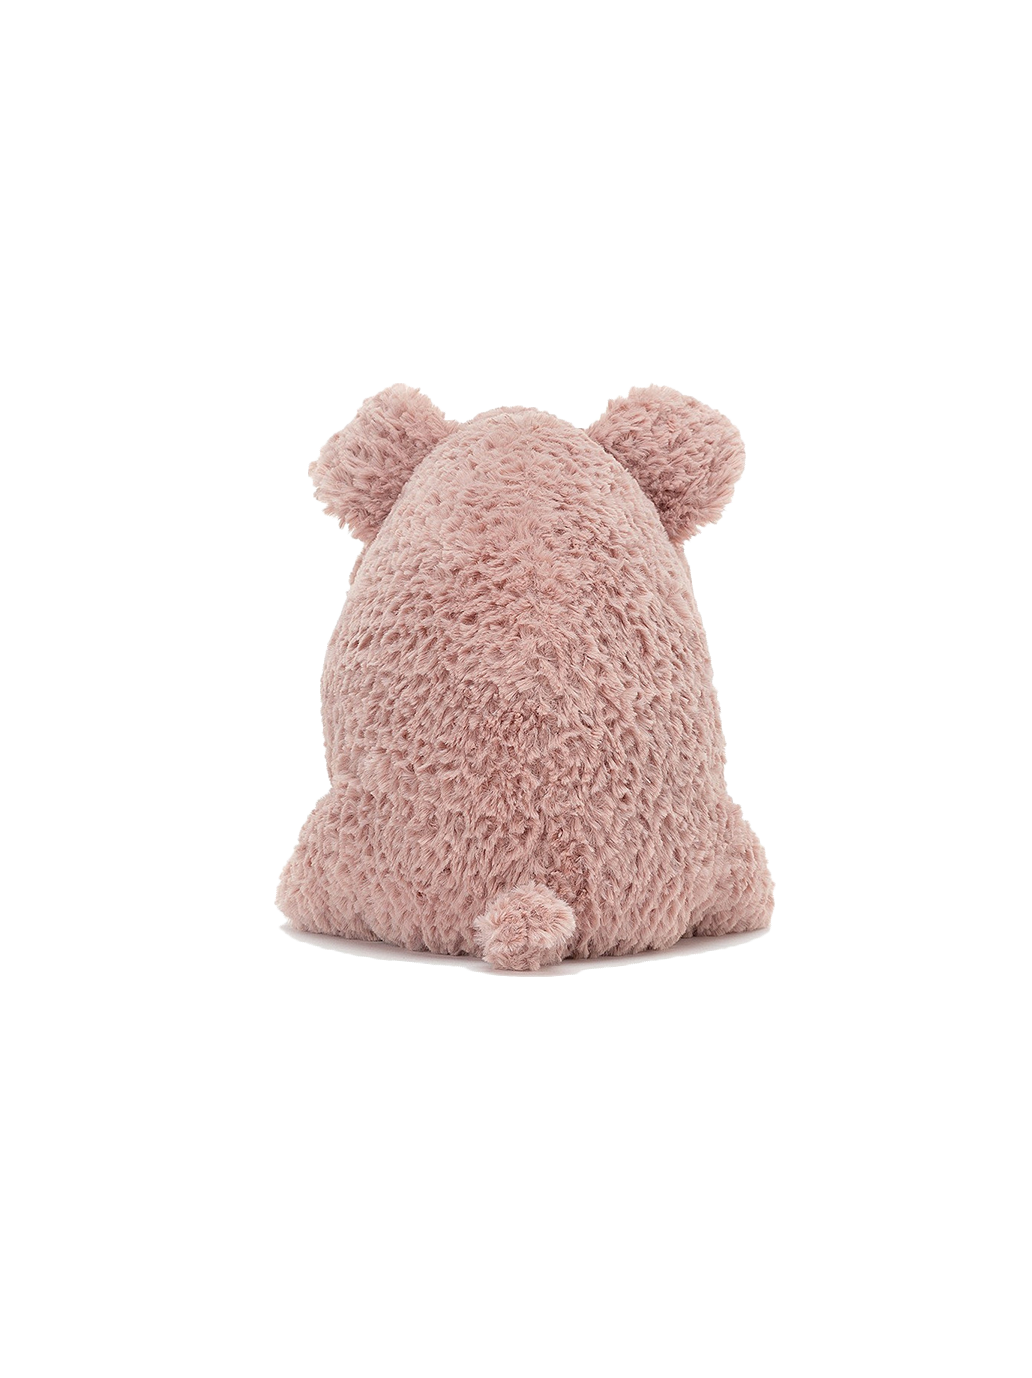 soft cuddly toy pig